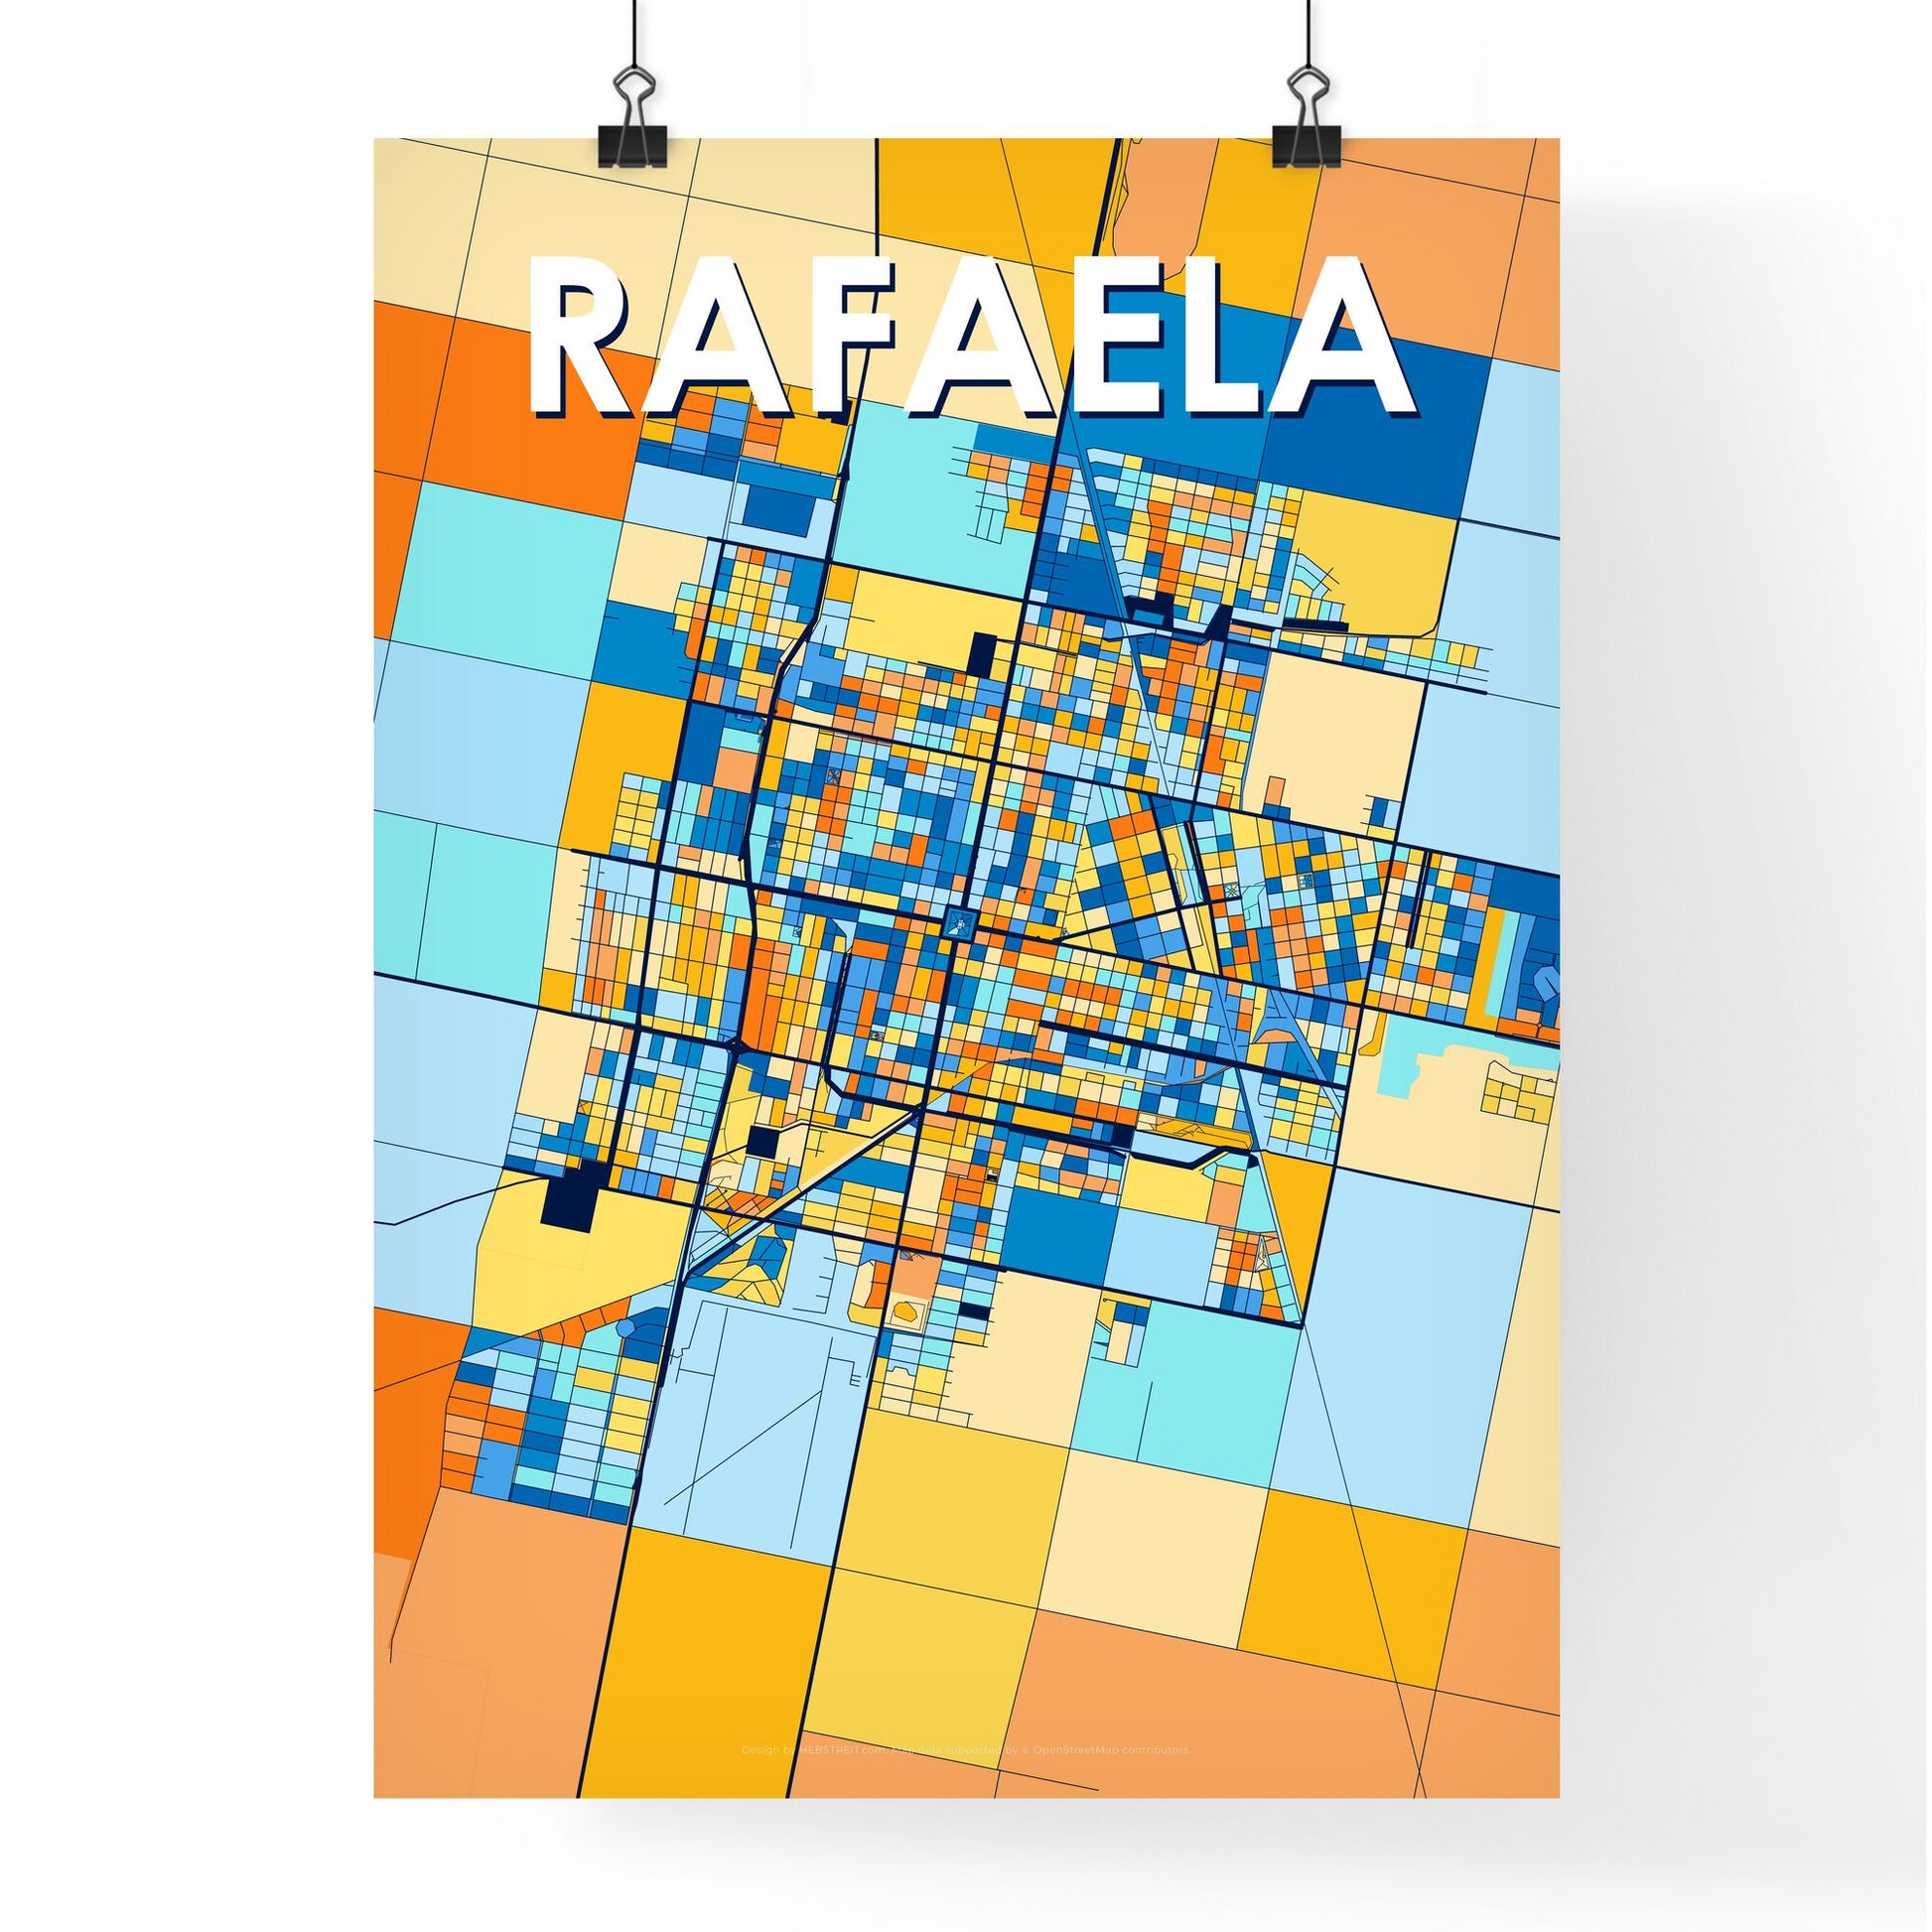 RAFAELA ARGENTINA Vibrant Colorful Art Map Poster Blue Orange